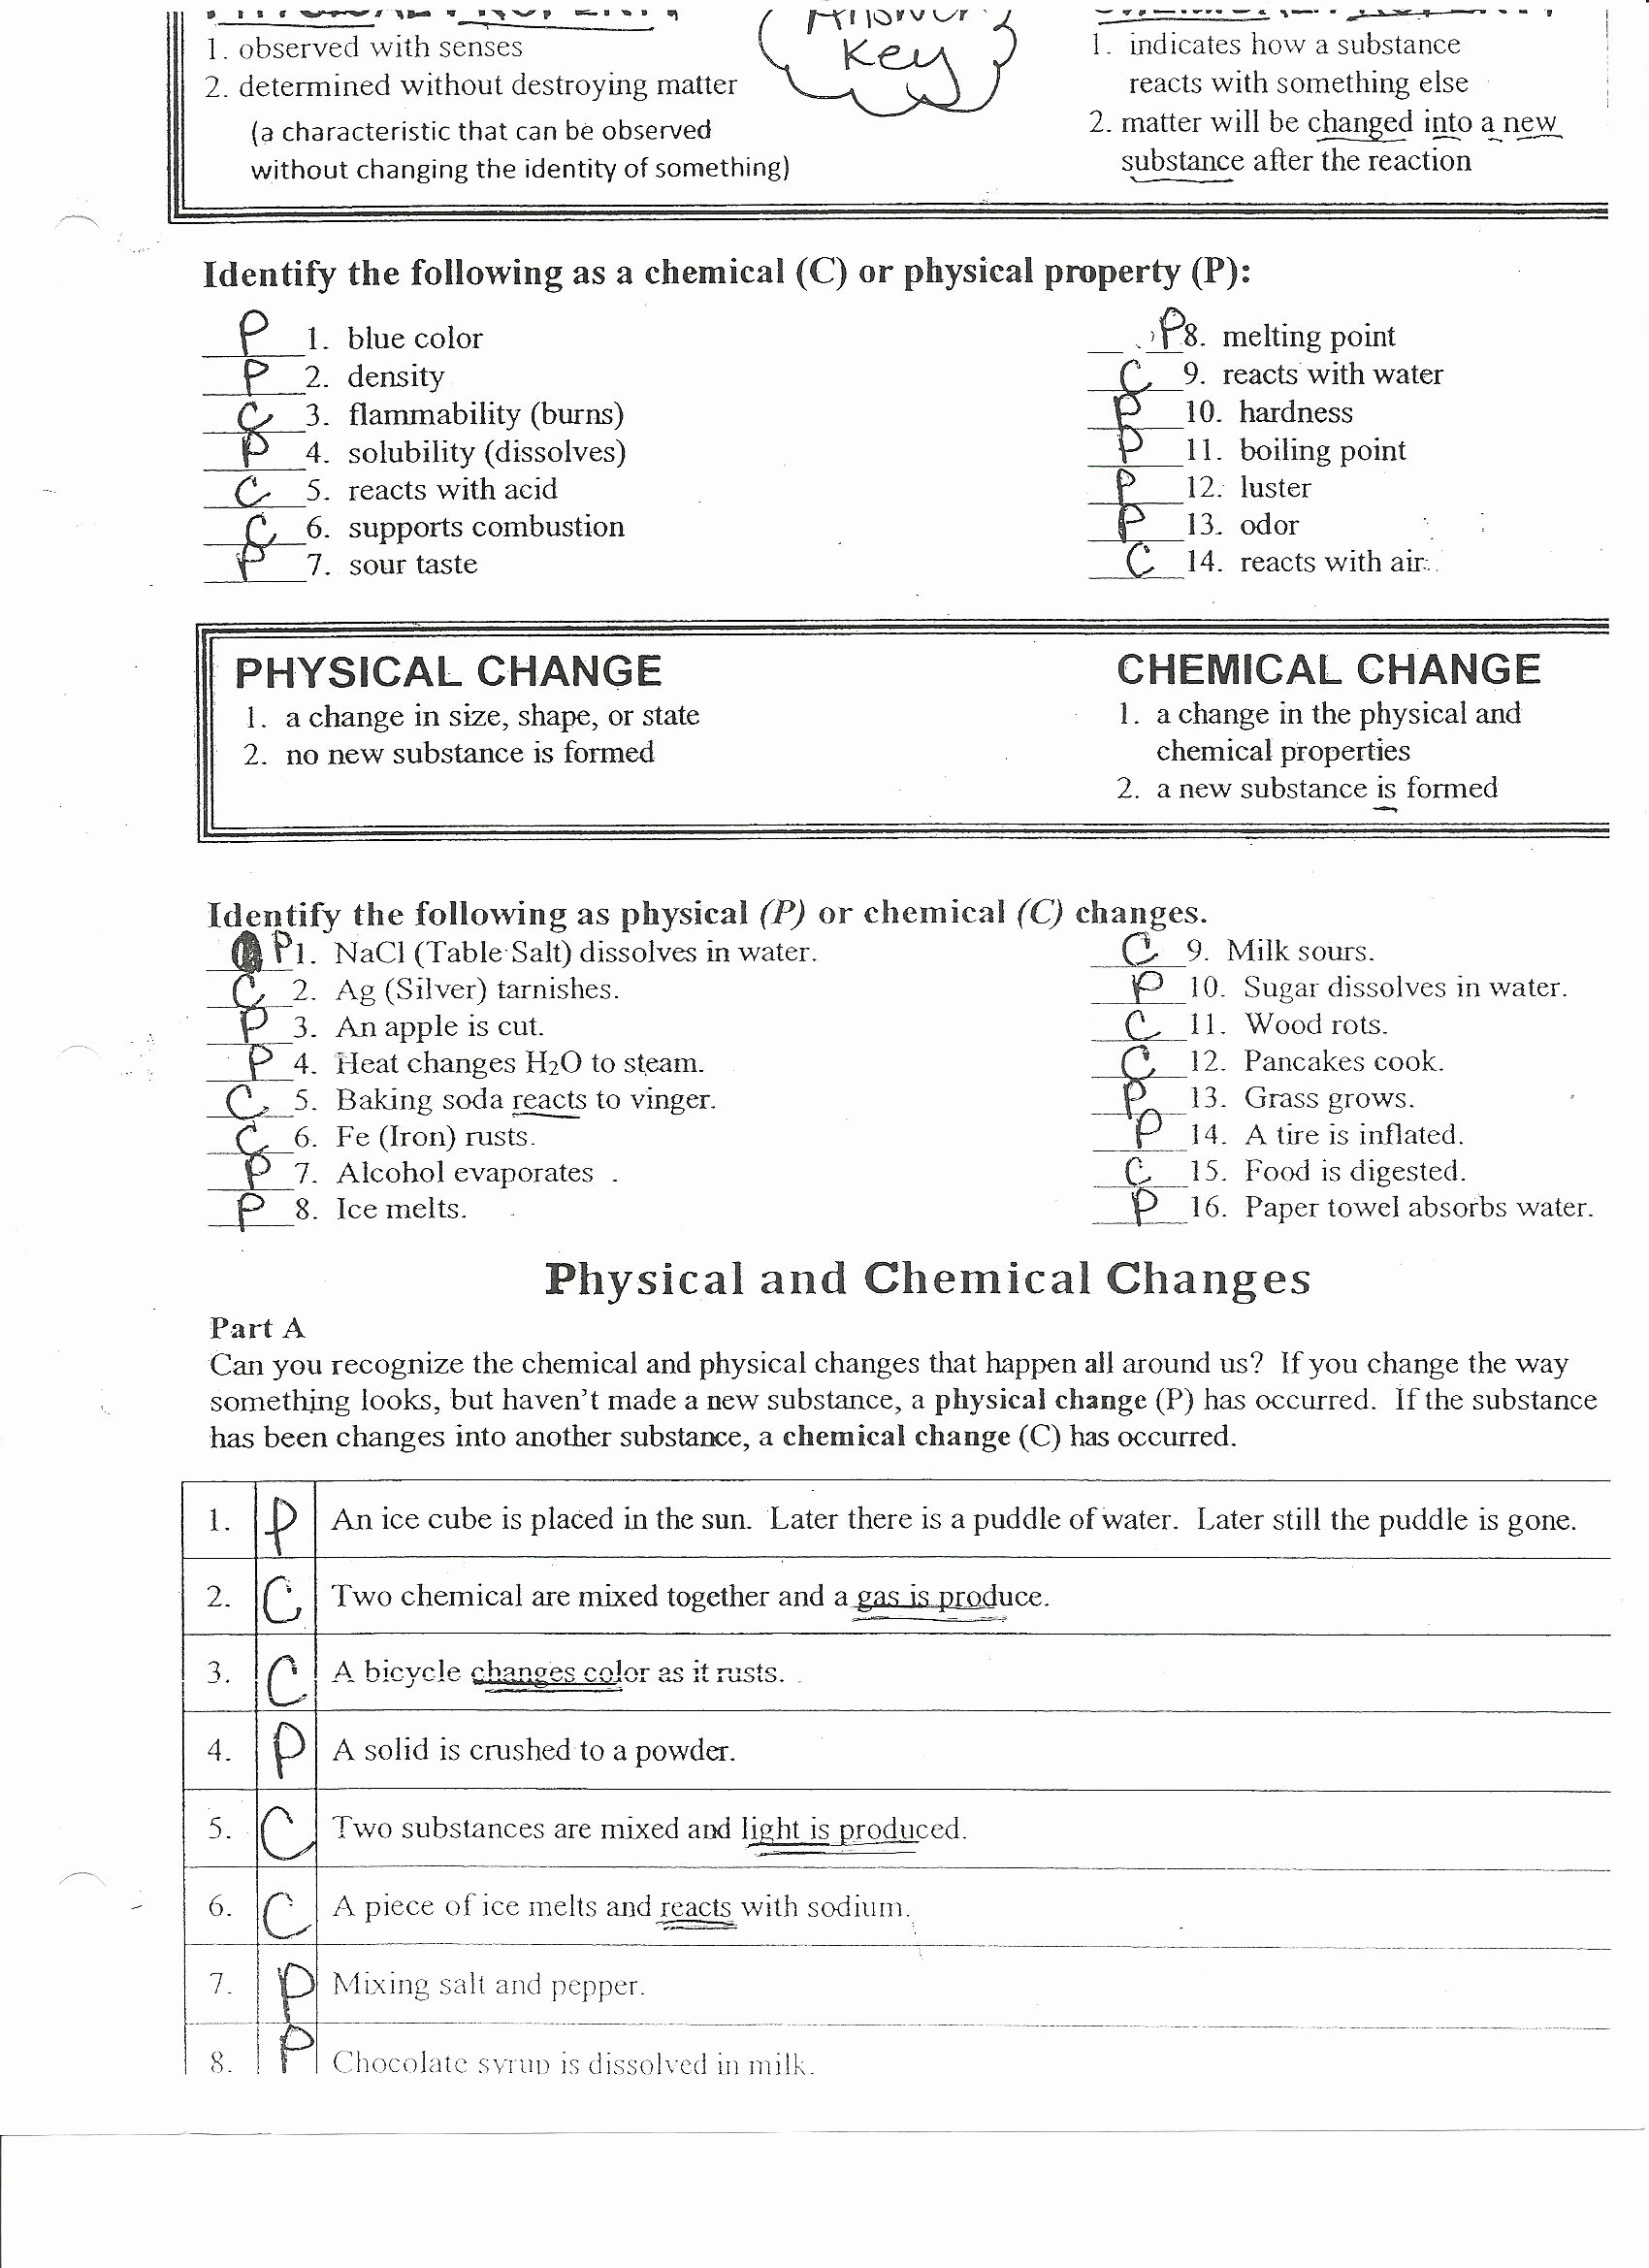 Physical Vs Chemical Changes Worksheet Fresh Chemistry Worksheets for Grade 9